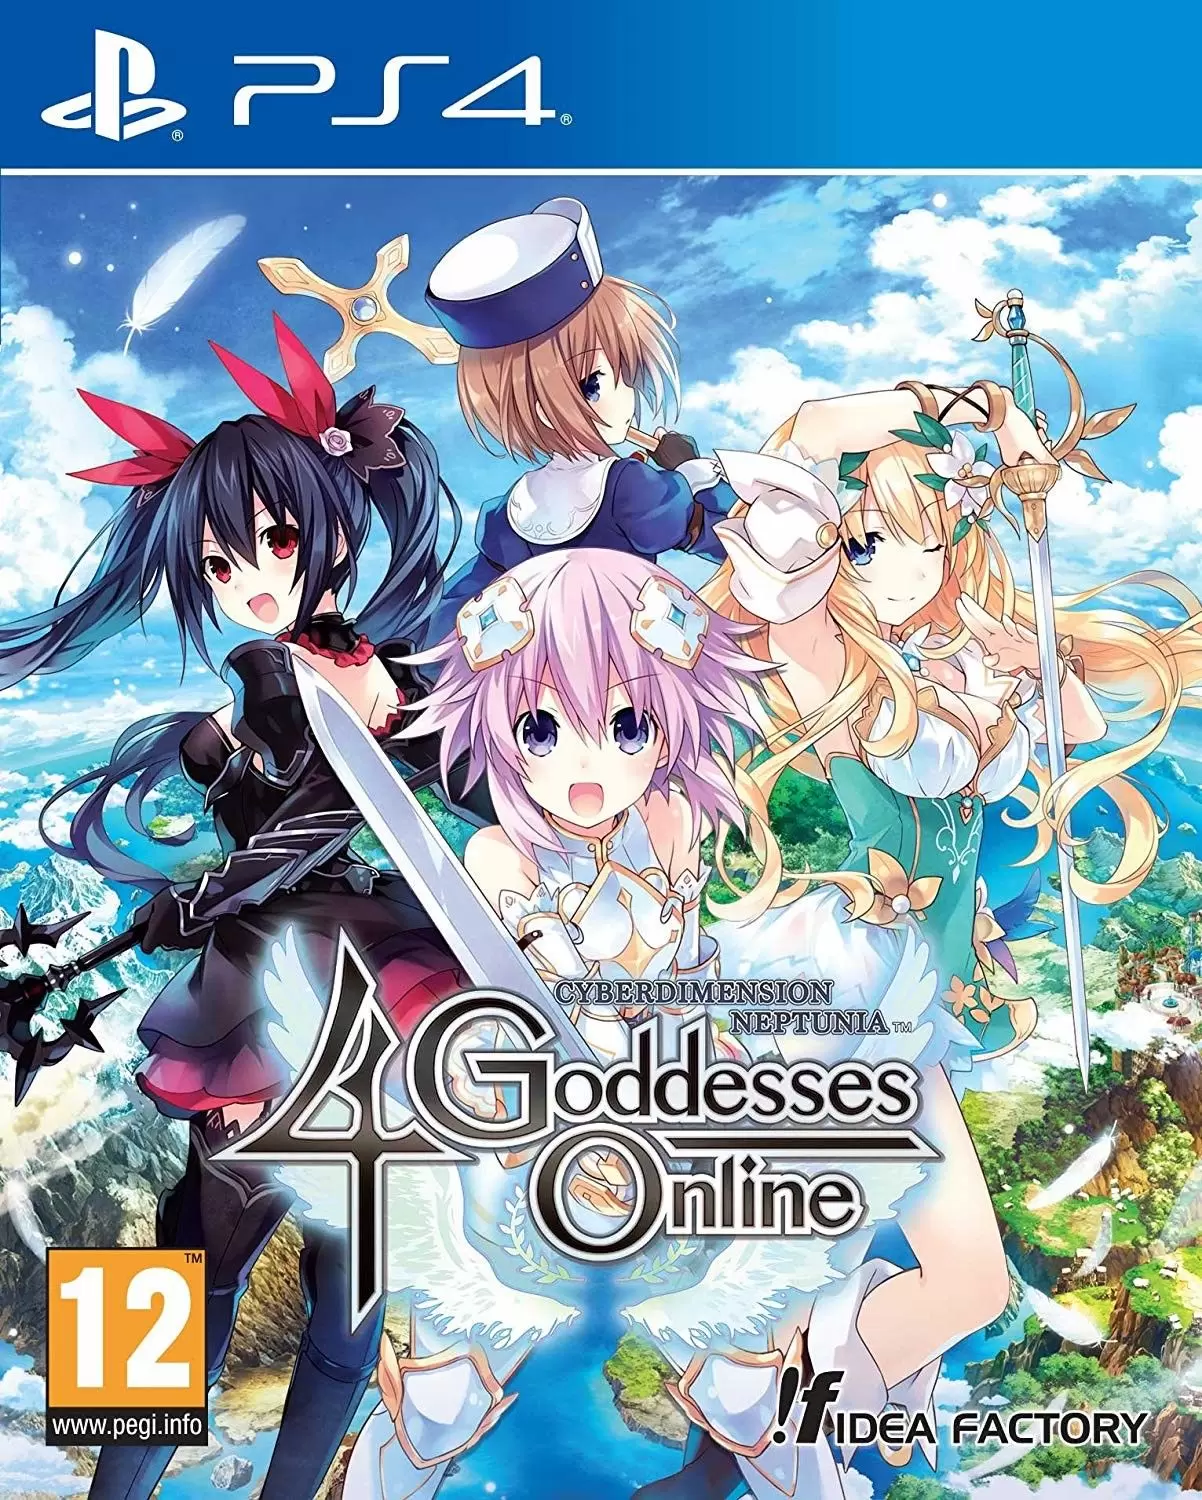 PS4 Games - Cyberdimension Neptuni a: 4 Goddesses Online